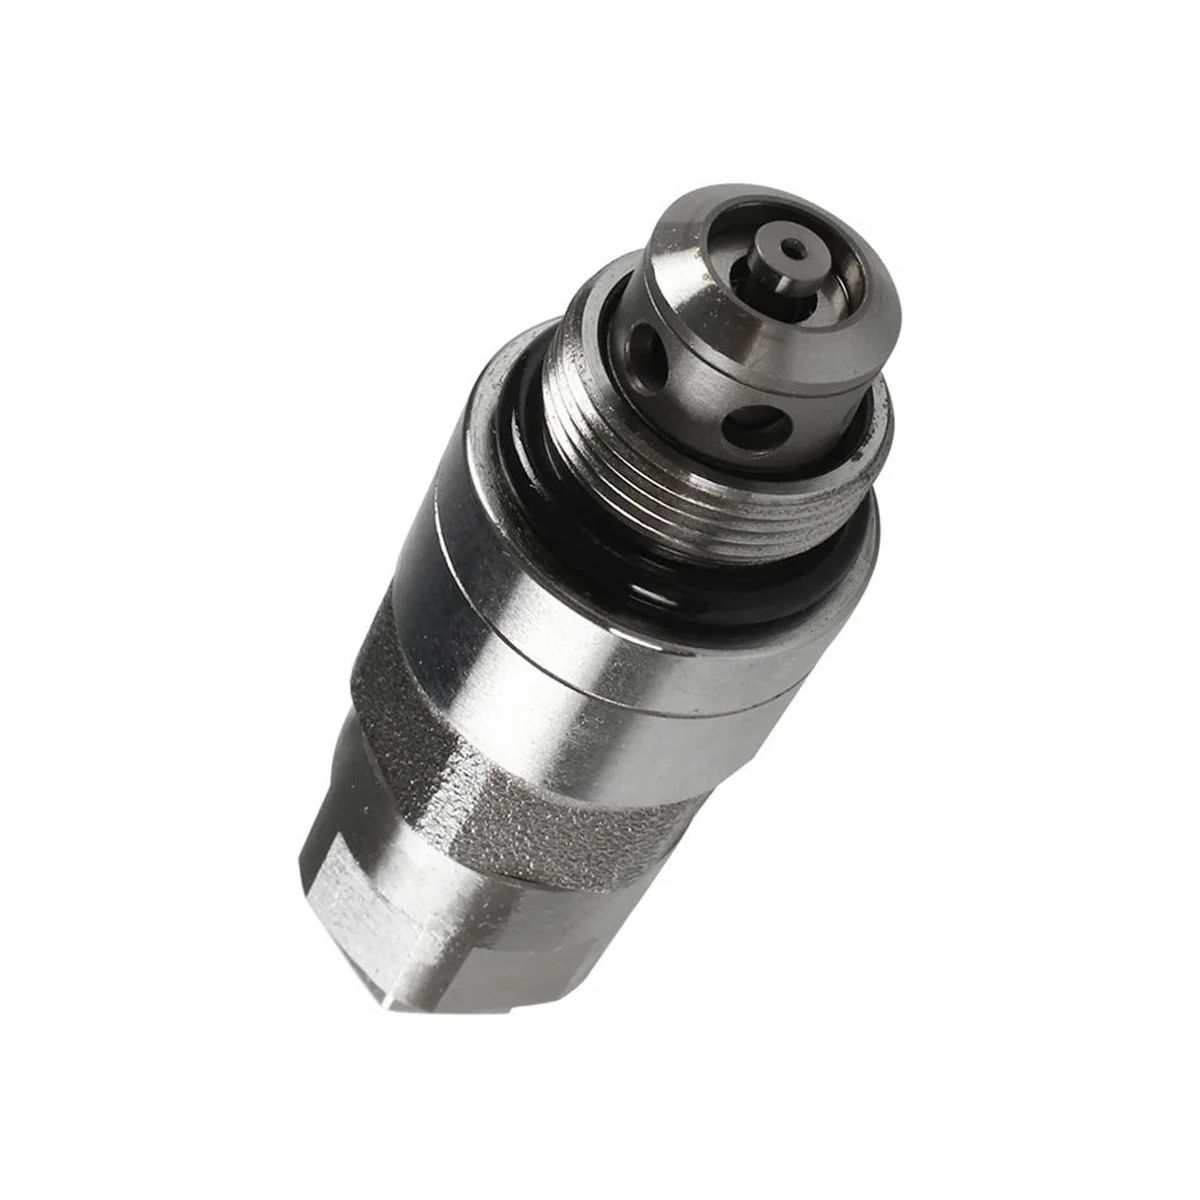 Предохранительный клапан YN22V00002F1 Всасывающий Клапан для экскаватора Kobelco SK230-6E SK200-2 SK200-5 SK200-6 Hitachi EX300-5 ZAX330